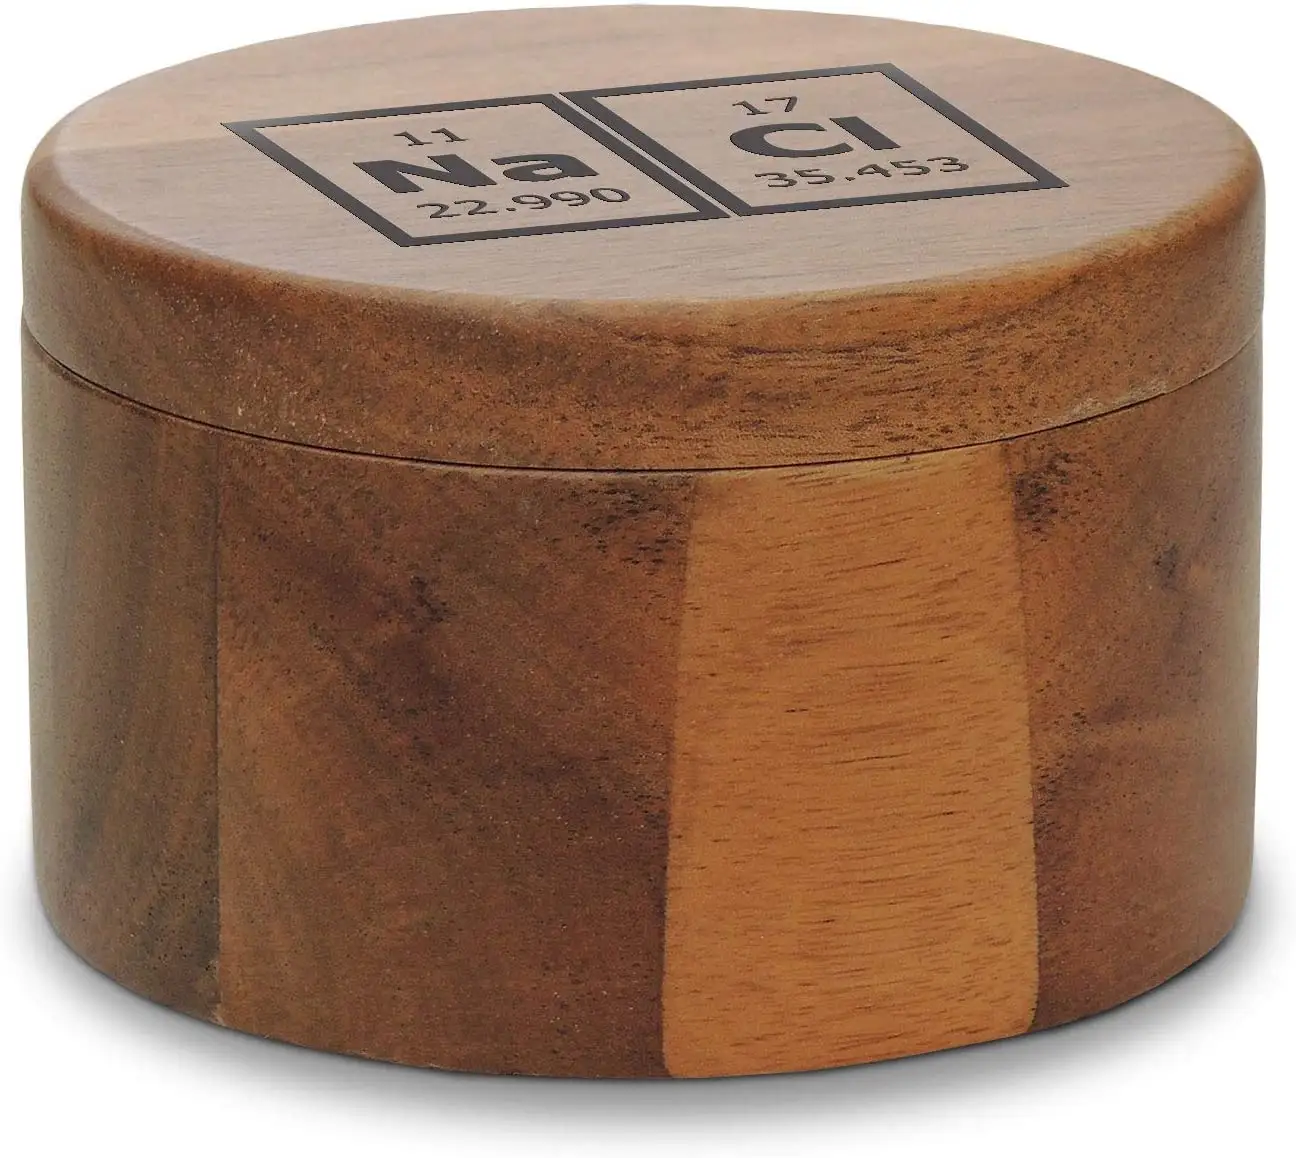 Caja de anillo de madera de Acacia, joyería redonda de lujo, propuesta